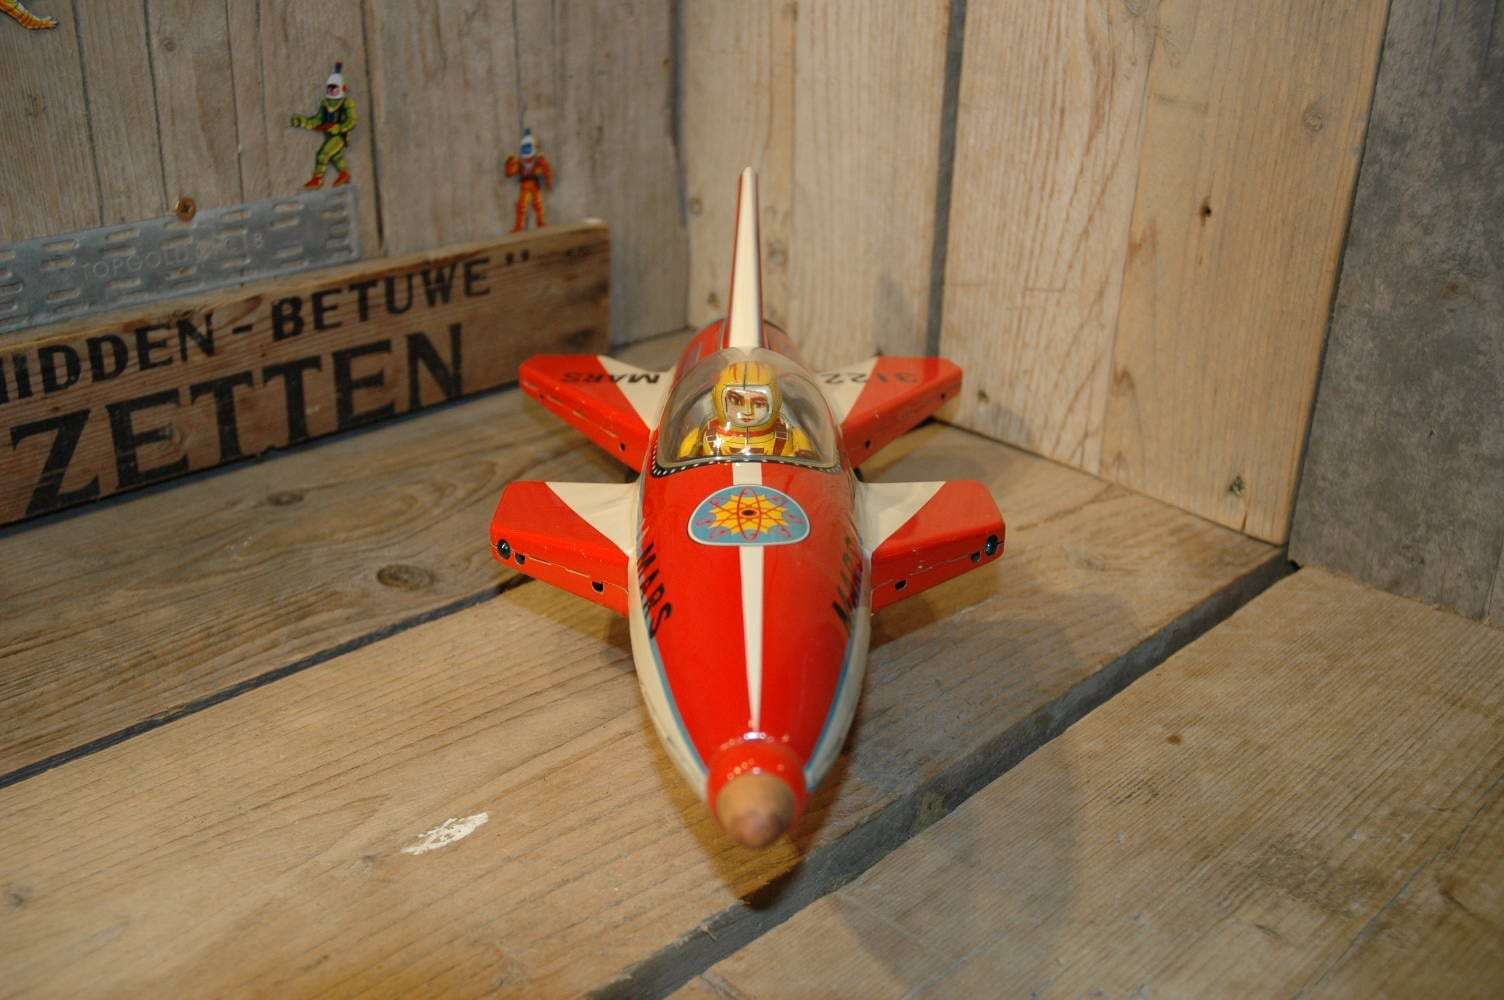 Modern Toys - Mars Rocket